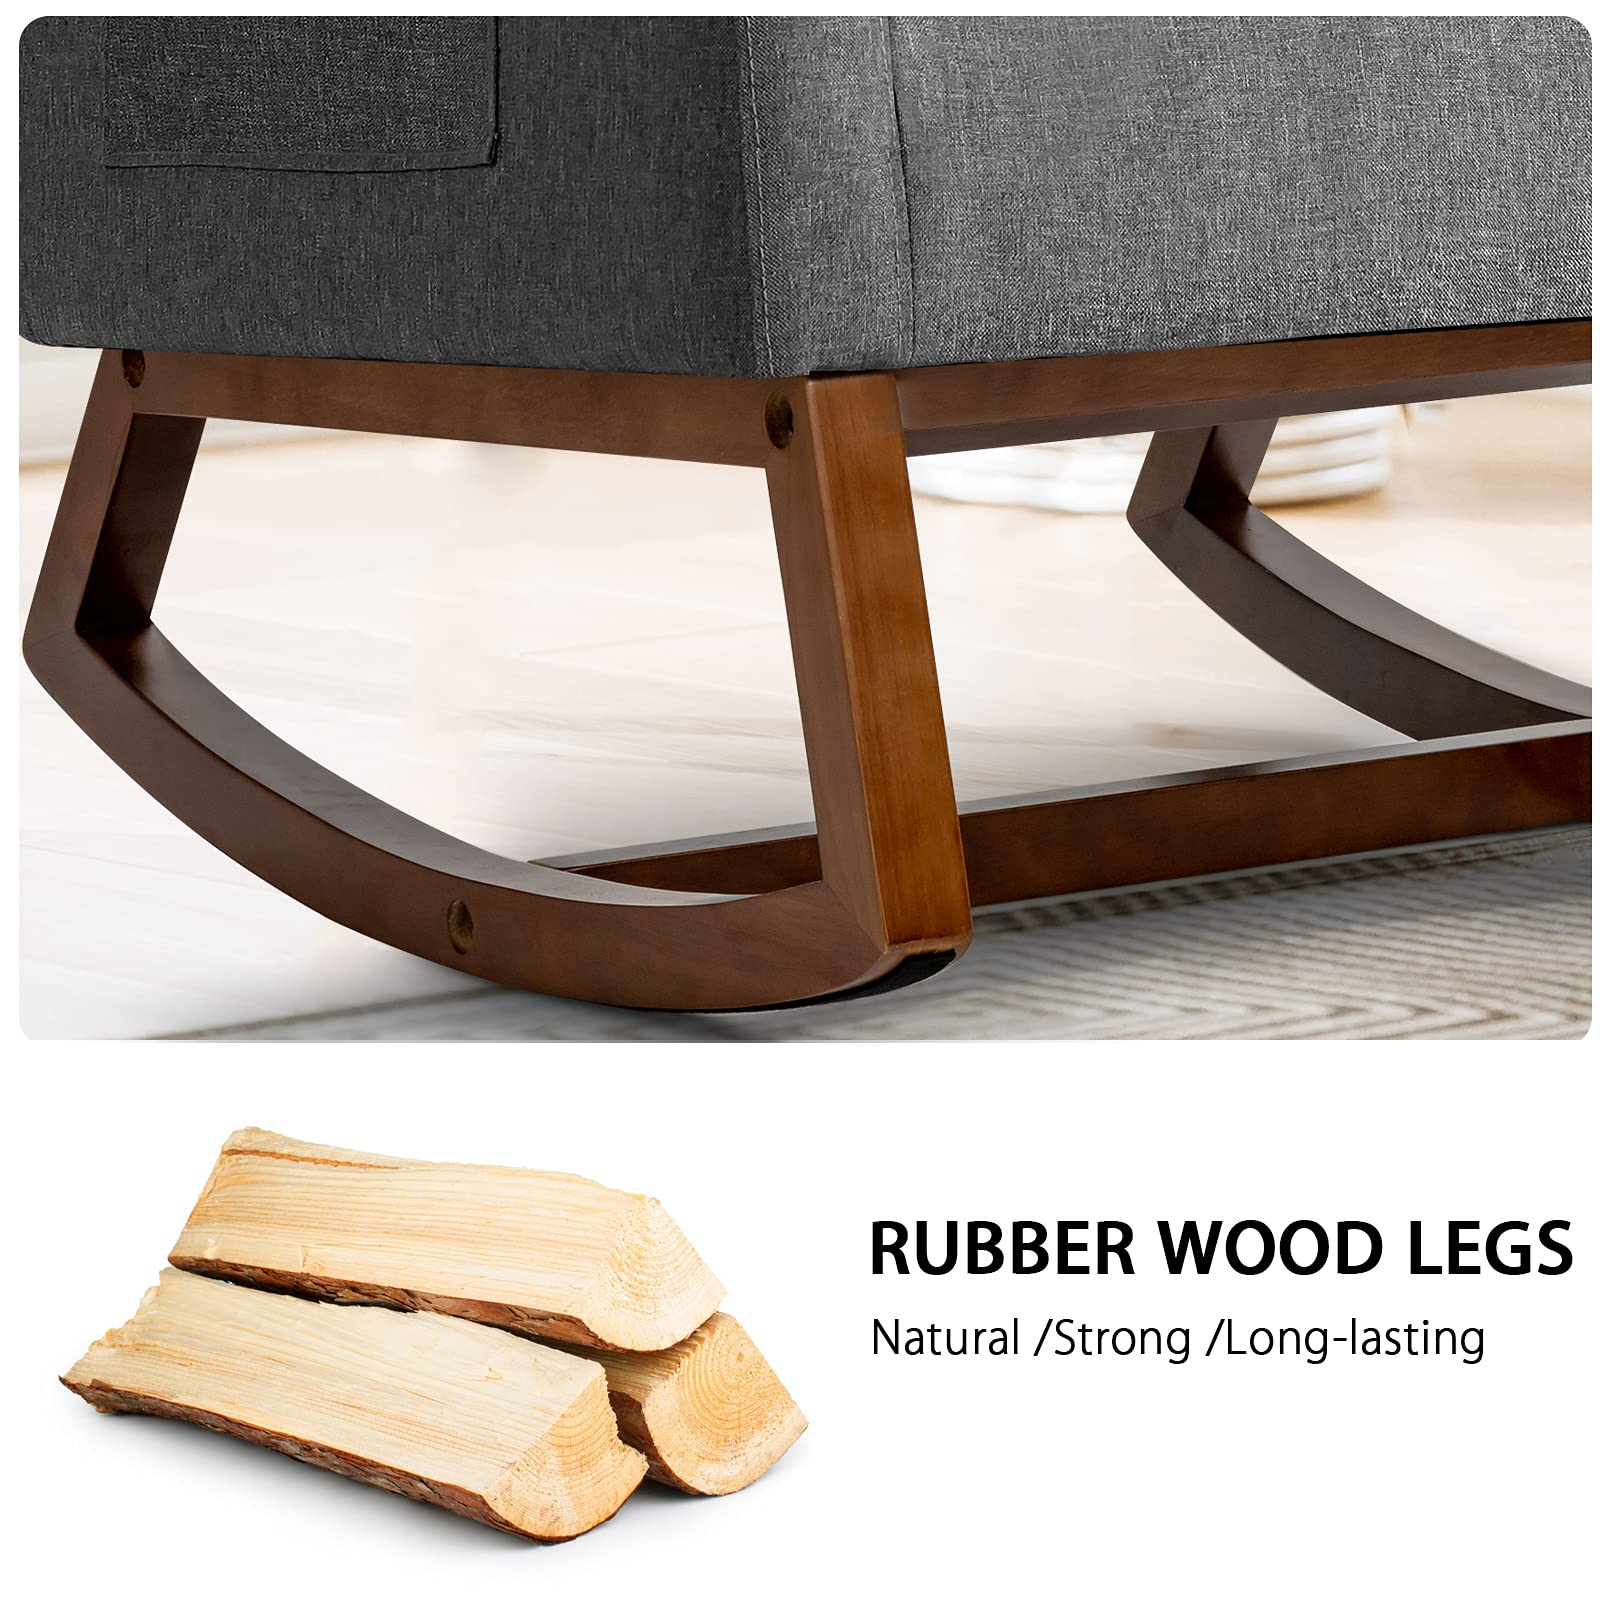 Giantex Upholstered Rocking Chair, Modern Fabric Armchair w/Wood Base